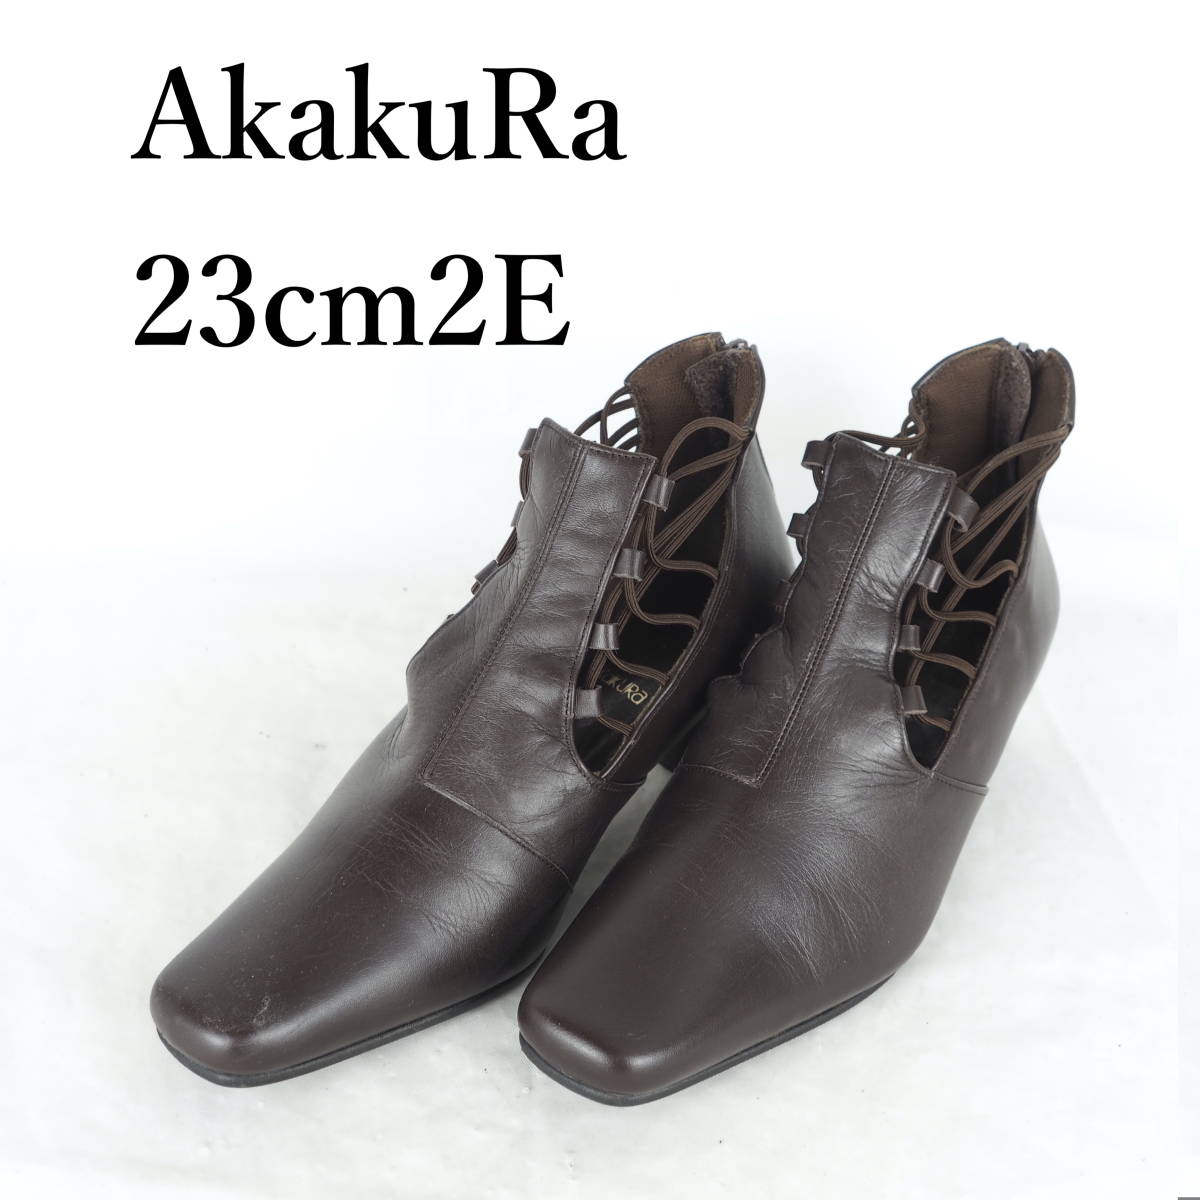 MK3423*AkakuRa* red kla* lady's pumps shoes *23cm2E* scorching tea 